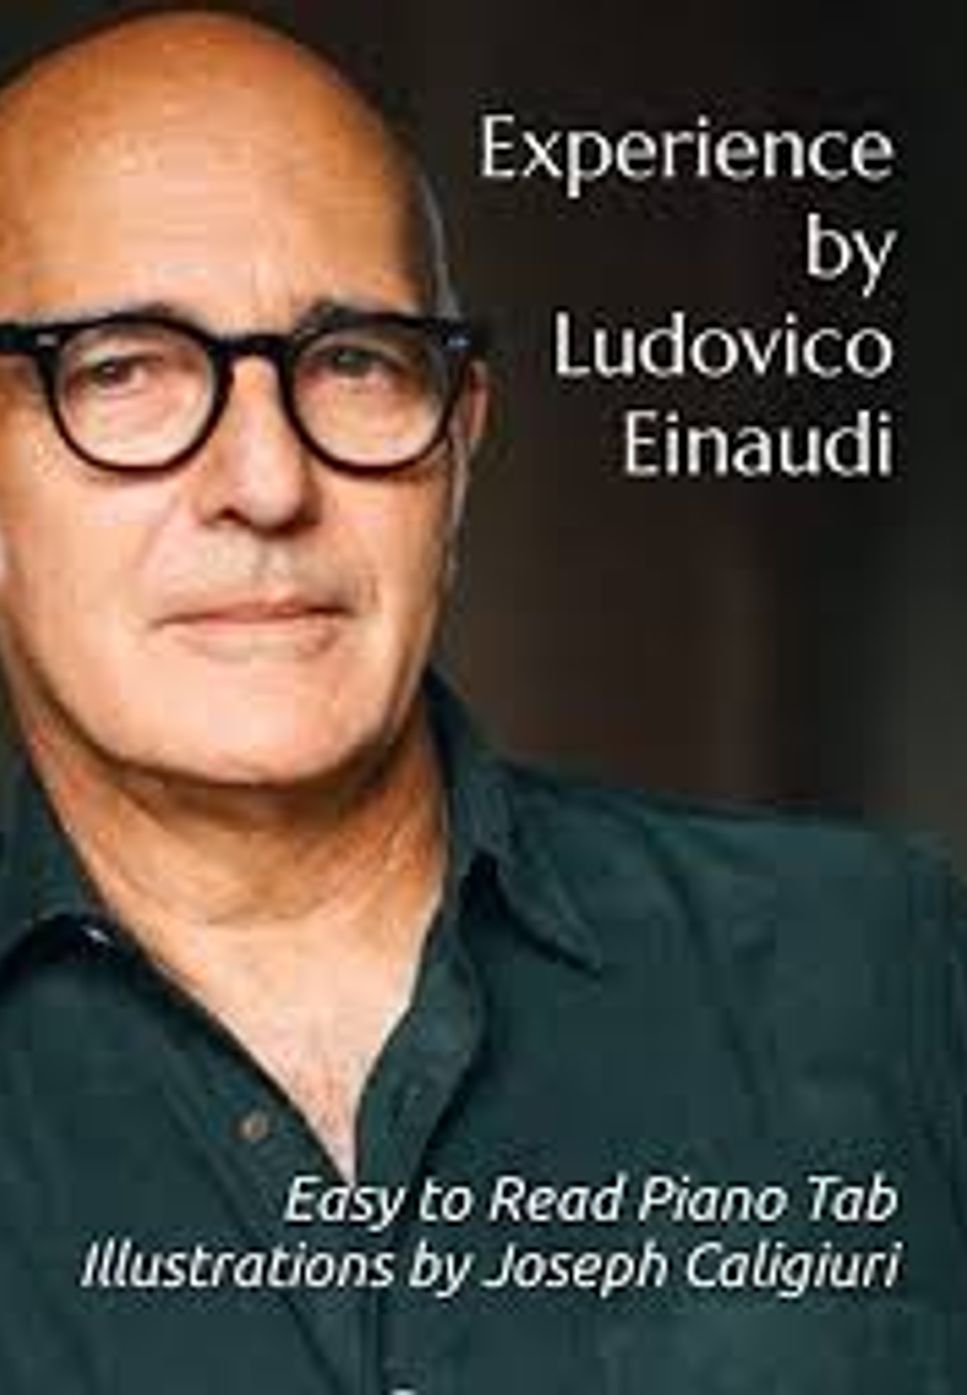 Ludovico Einaudi - Experience - Ludovico Einaudi  ( Sheets by Helin Sentürk